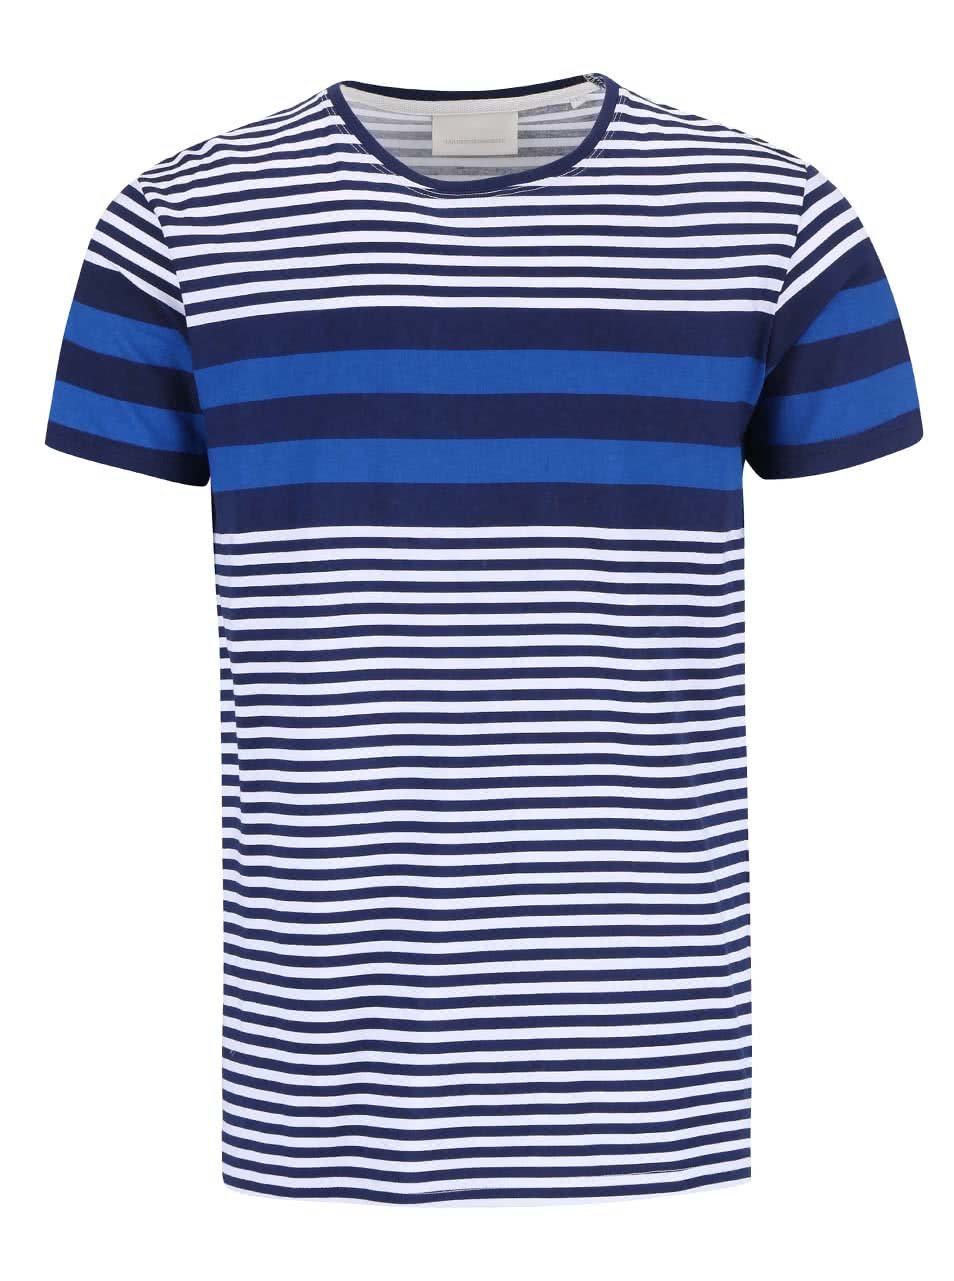 Modré pruhované triko Tailored & Originals Rickinghall